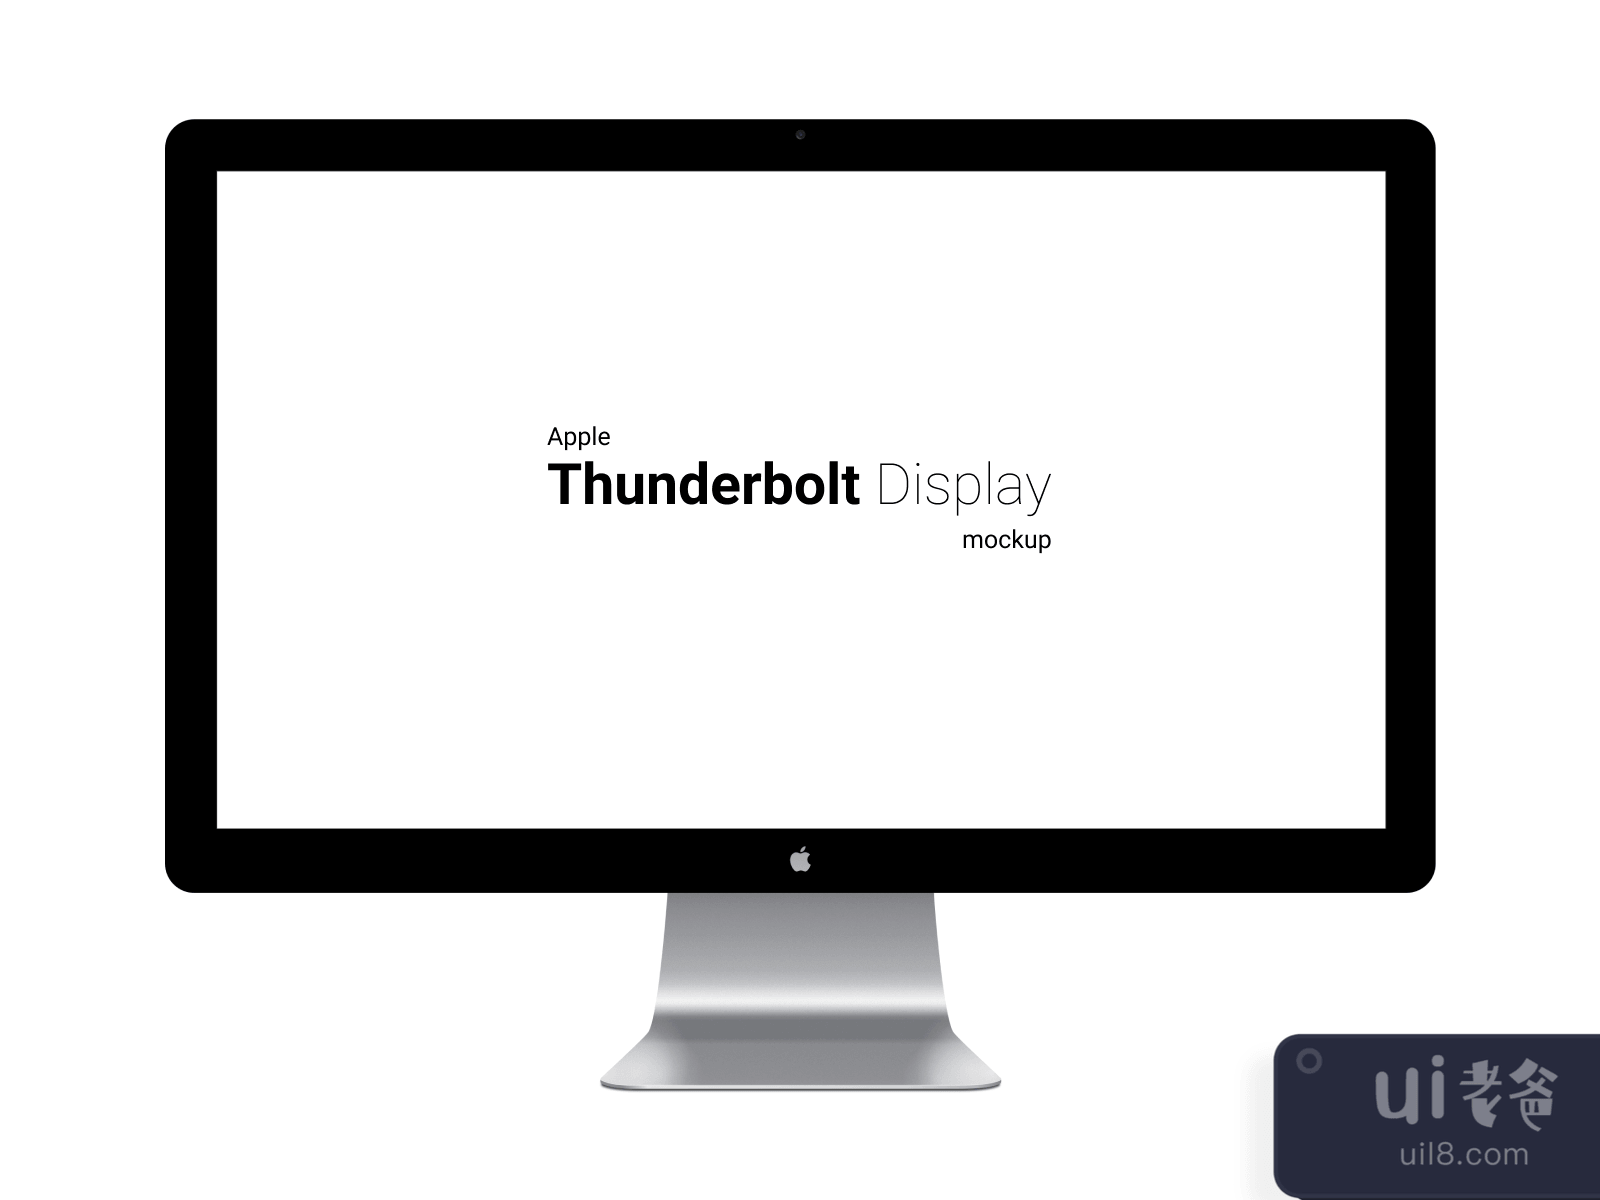 Apple Thunderbolt Display Mockup for Figma and Adobe XD No 2